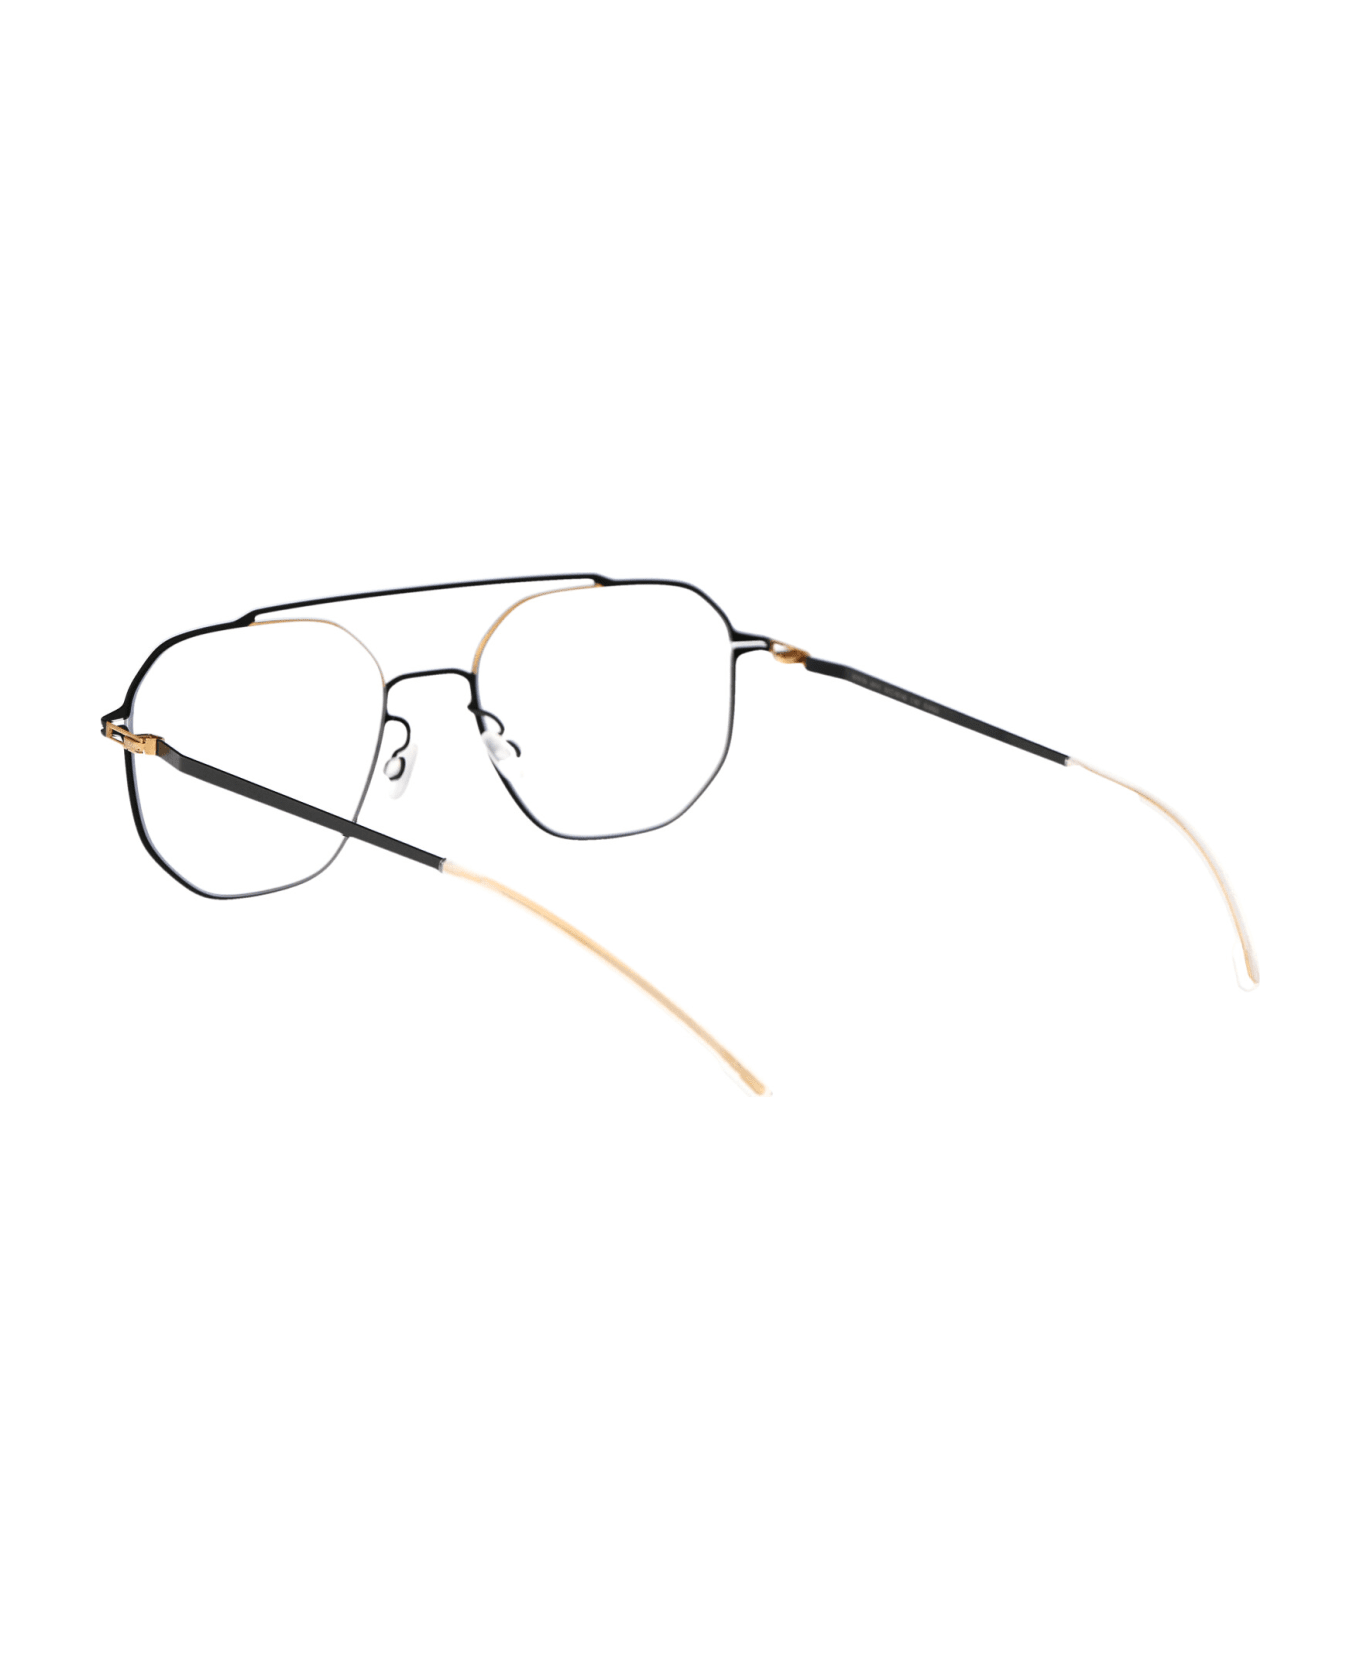 Mykita Arvo Glasses - 167 Gold Jetblack|Clear アイウェア